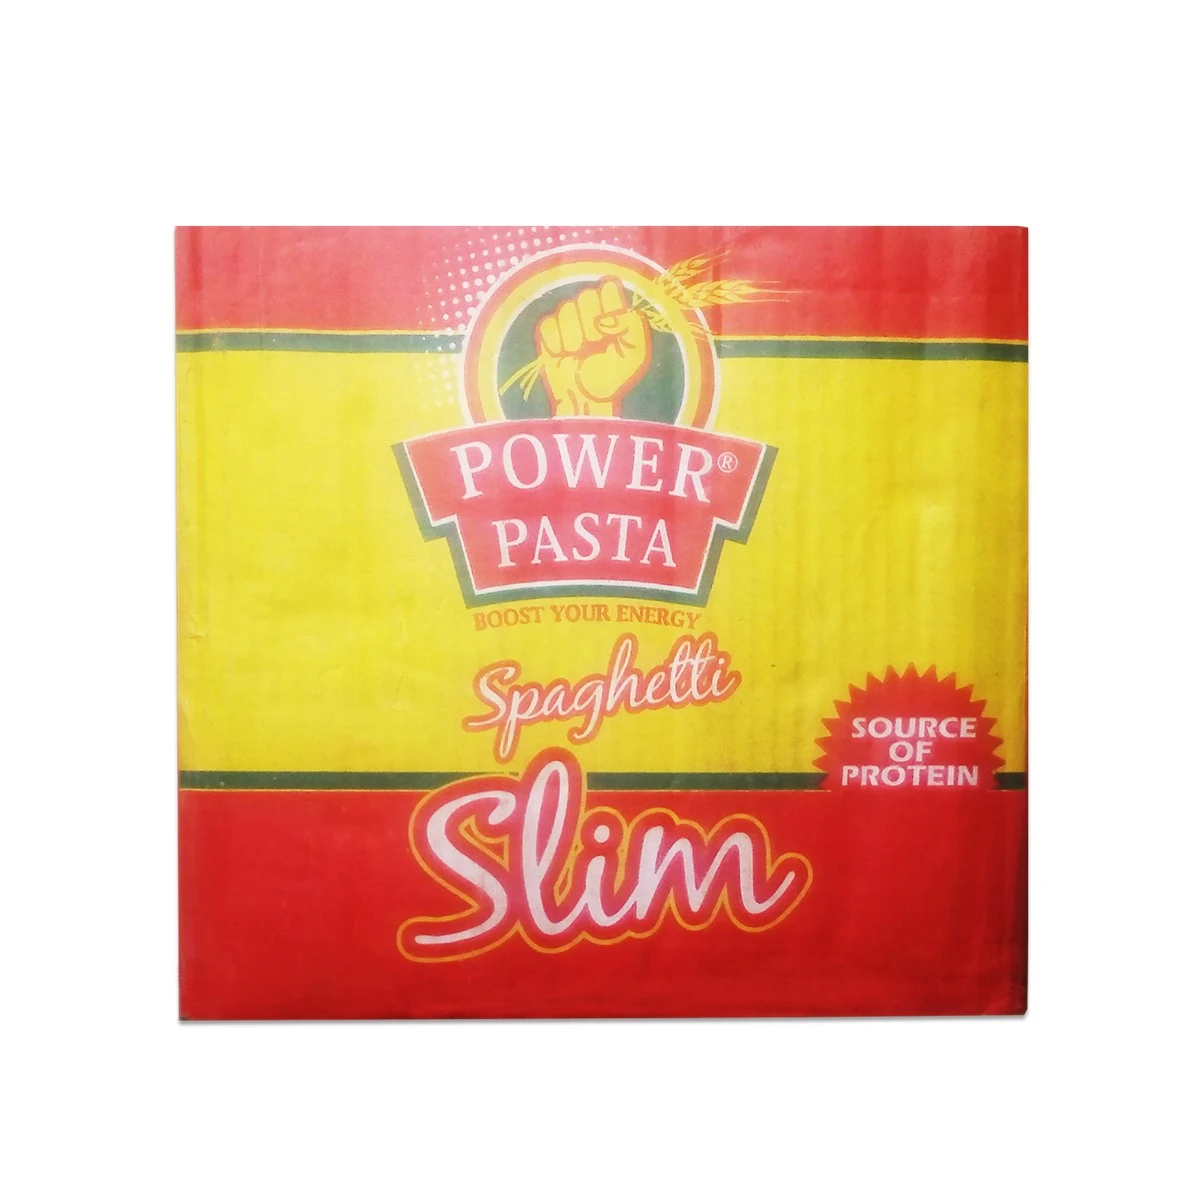 Power Pasta Slim Spaghetti 500g x 20 carton